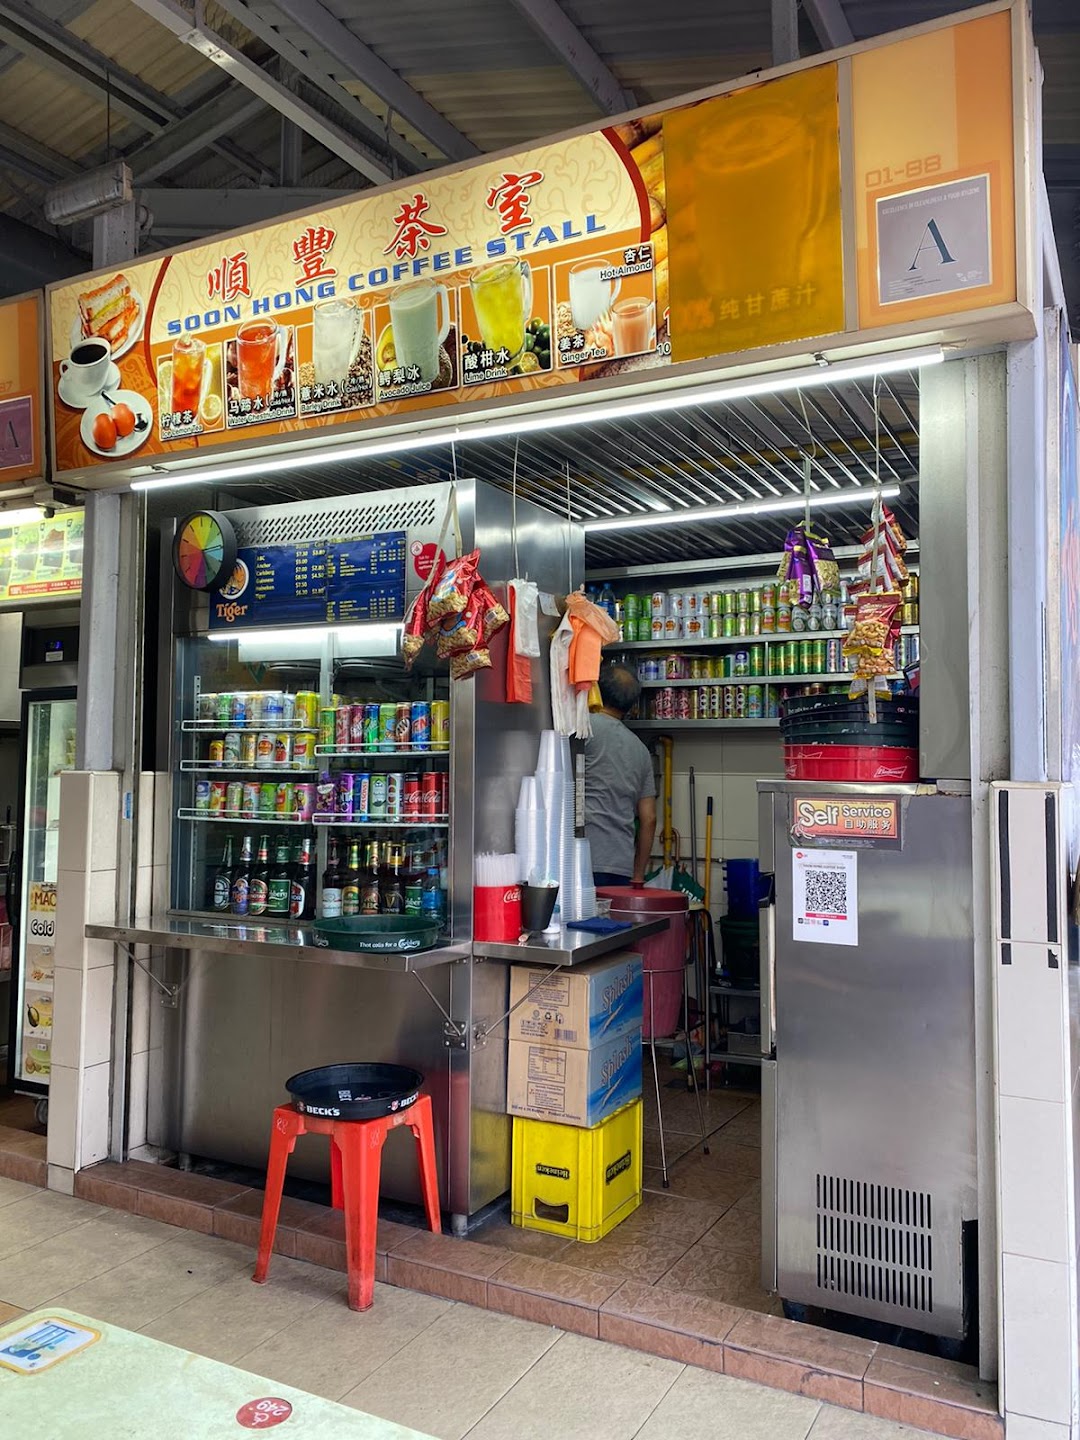 Soon Hong Coffee Stall